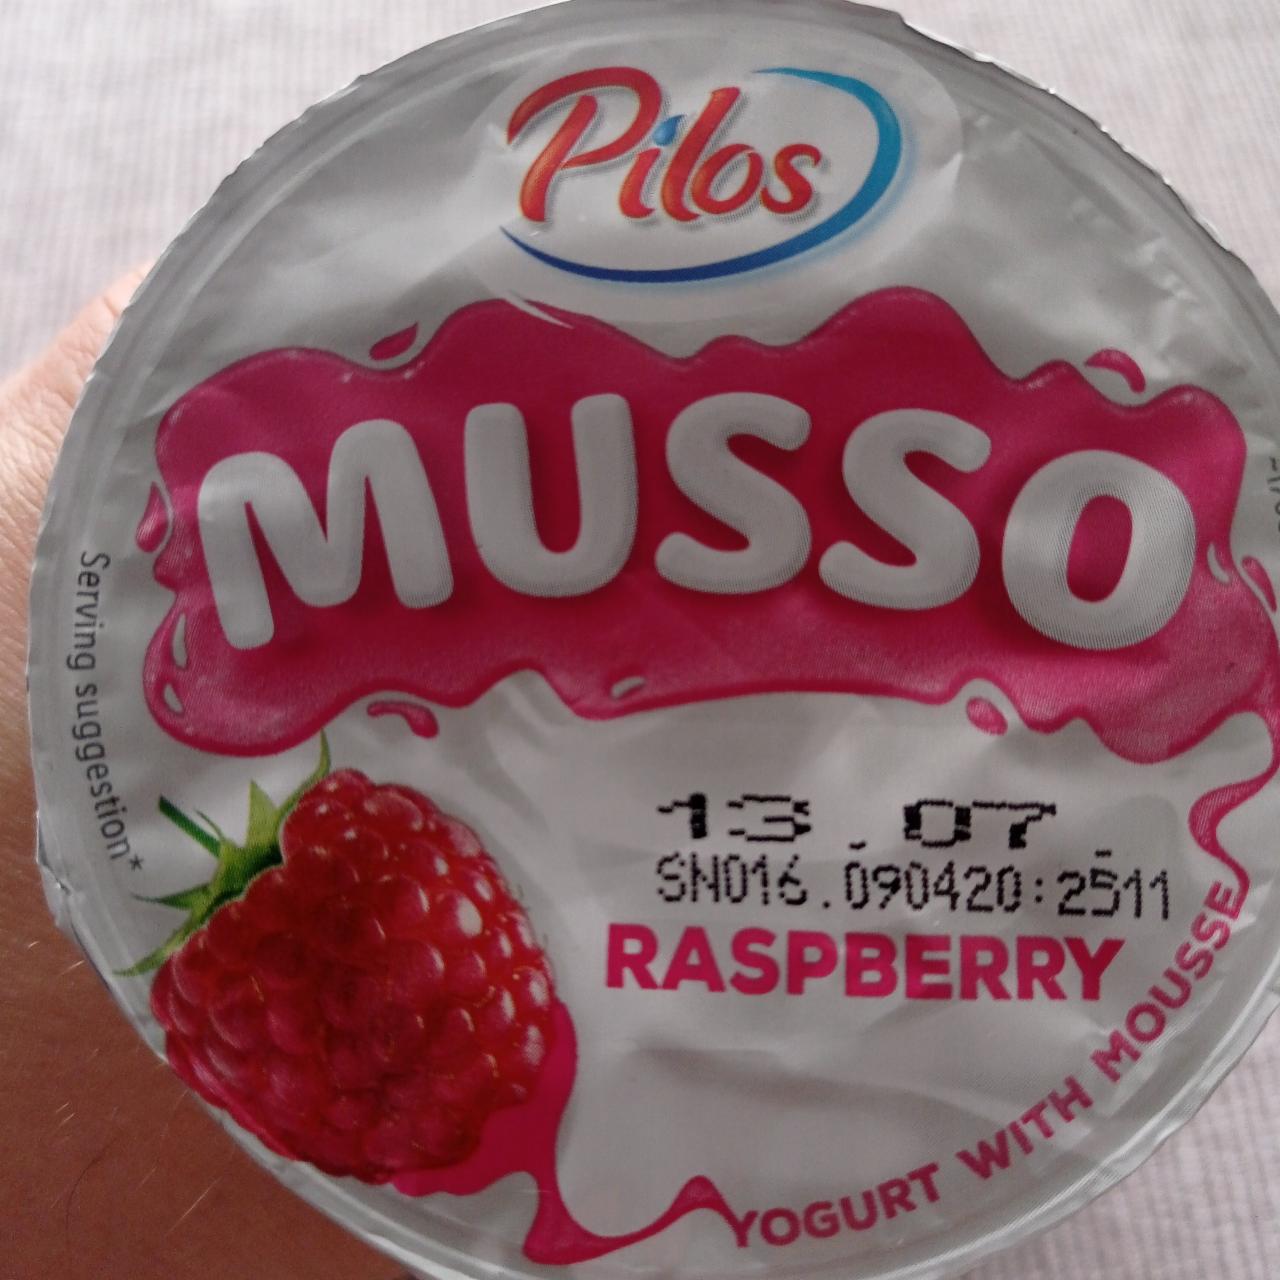 Zdjęcia - Jogurt musso raspberry pilos